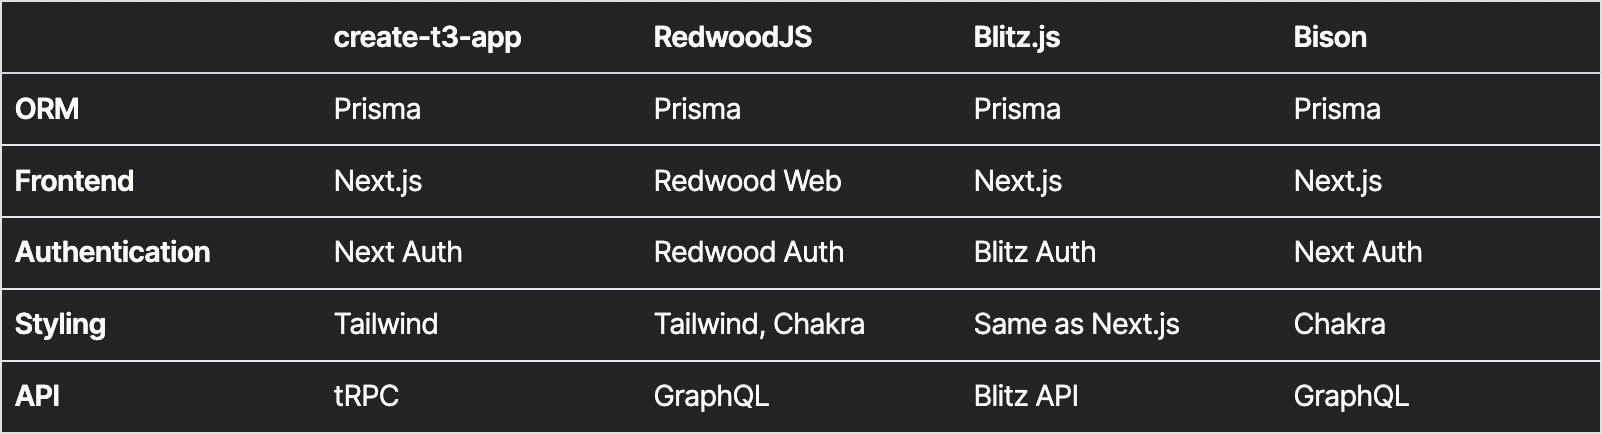 03 - Framework comparison table between create-t3-app, RedwoodJS, Blitz.js, and Bison